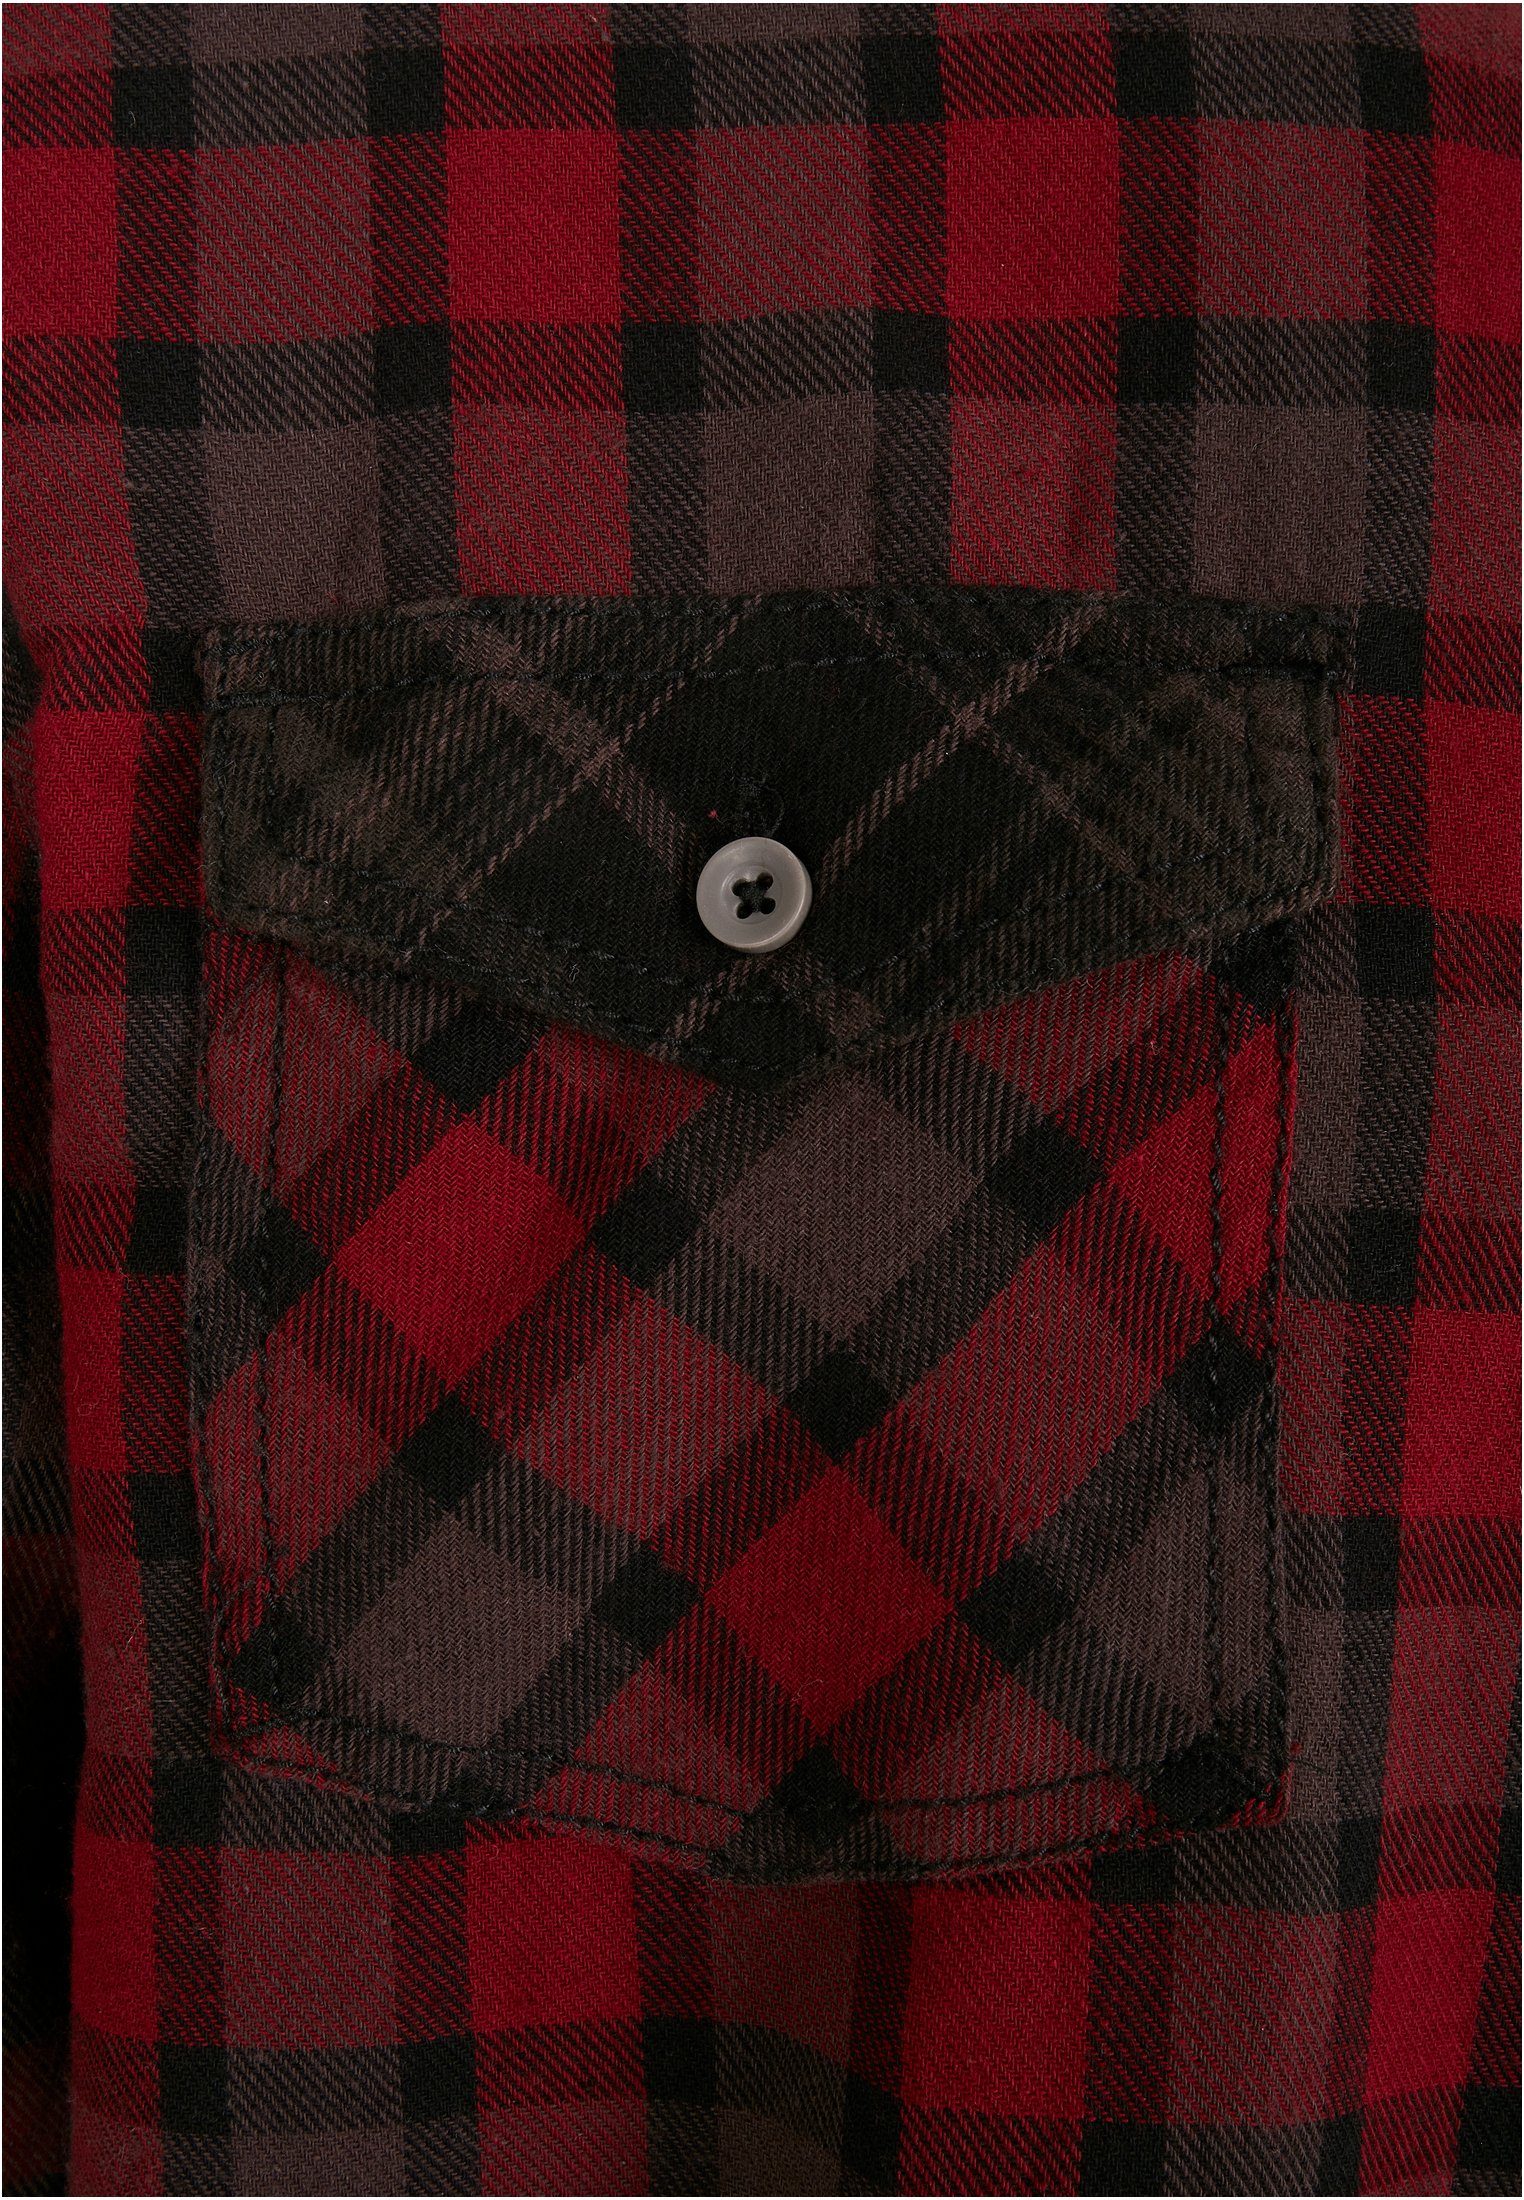 (1-tlg) Herren Checked Langarmhemd red-brown Duncan Shirt Brandit